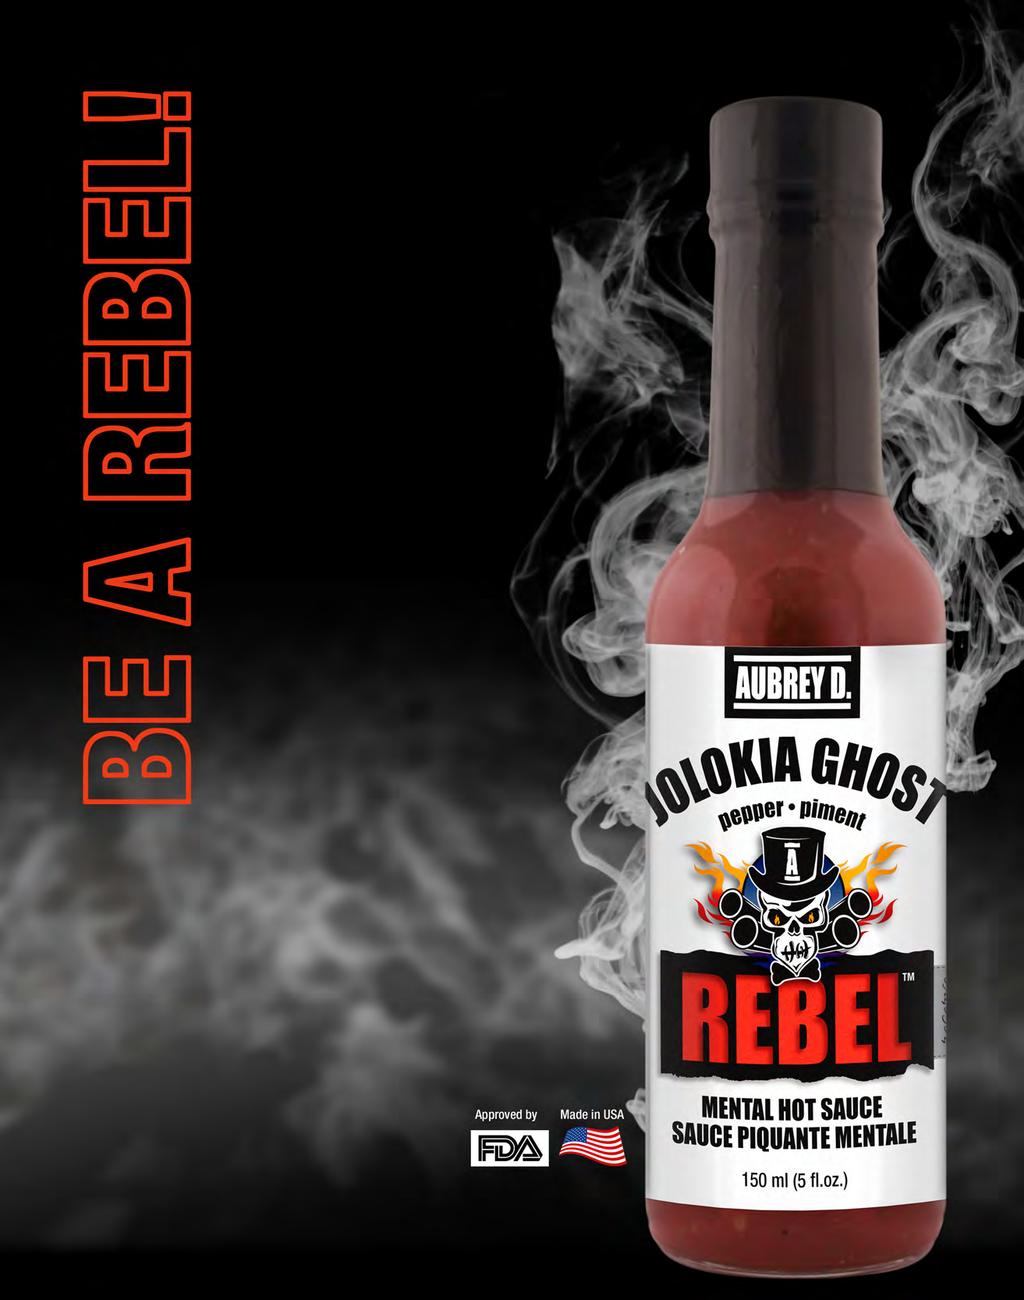 Man The Aubrey D. Rebel Jolokia Ghost Hot Sauce is mental!